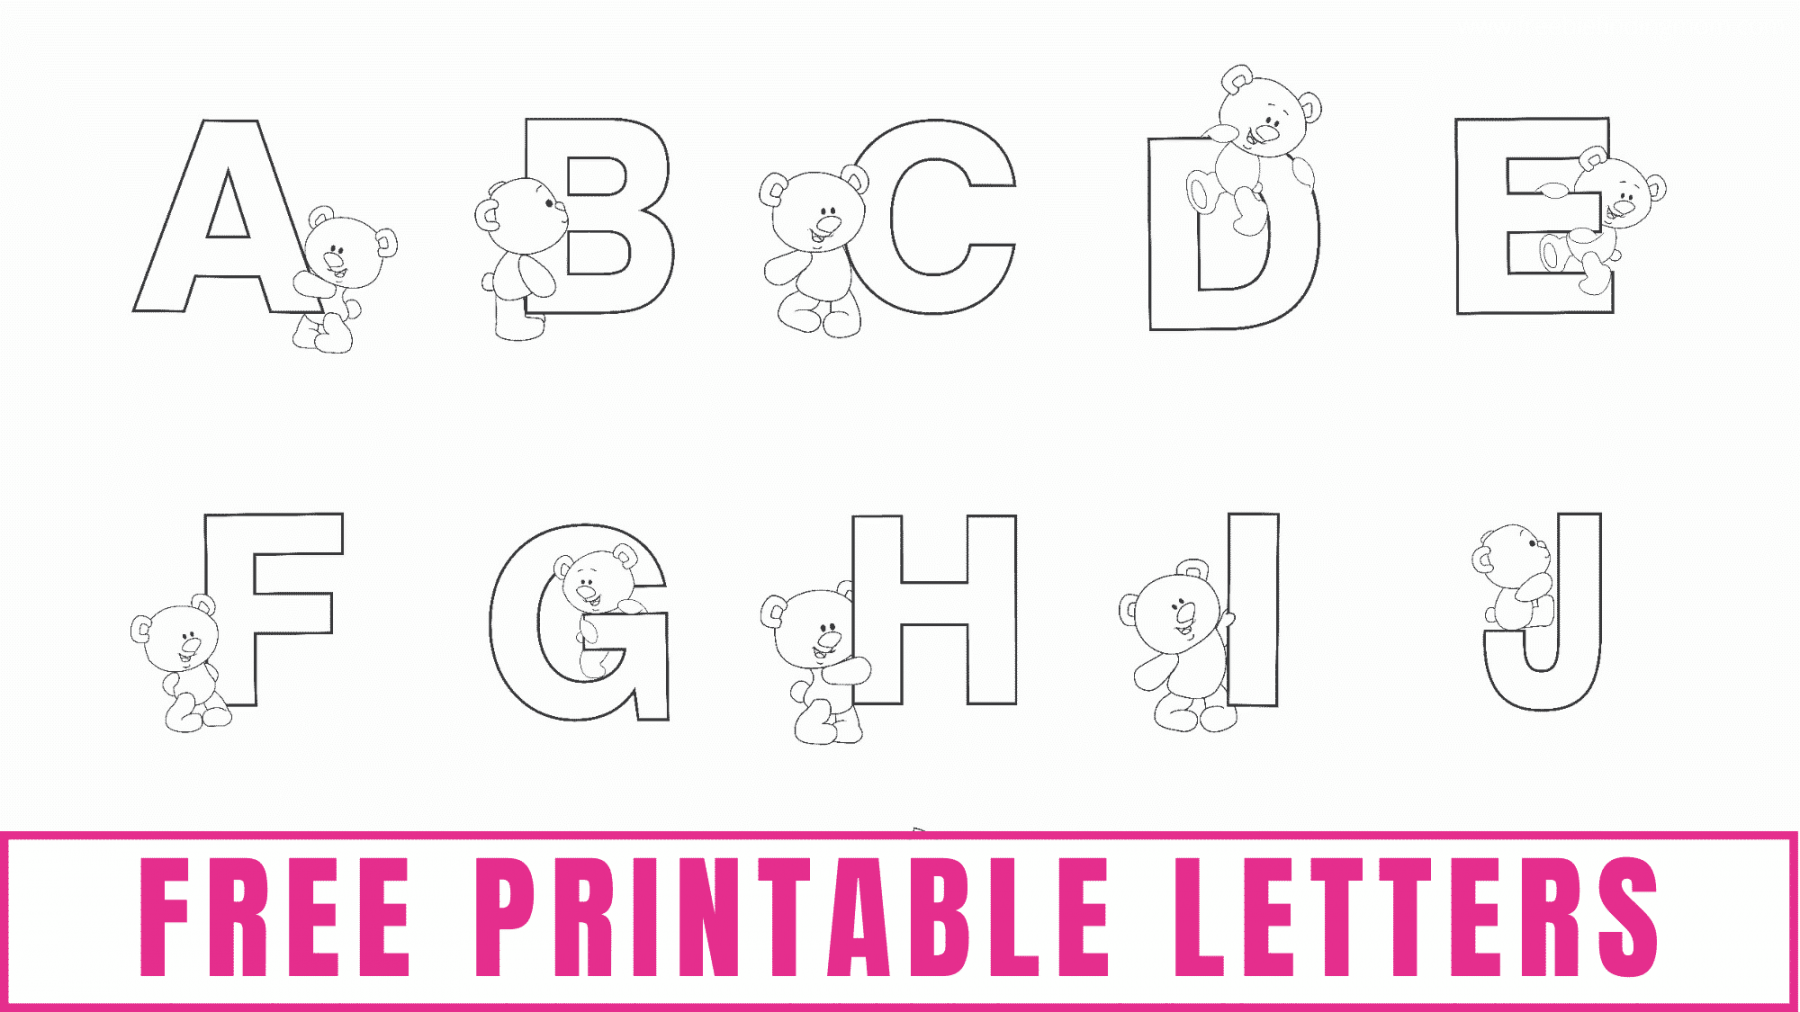 Alphabet Letters Printable Free - Printable - Free Printable Letters and Alphabet Letters - Freebie Finding Mom